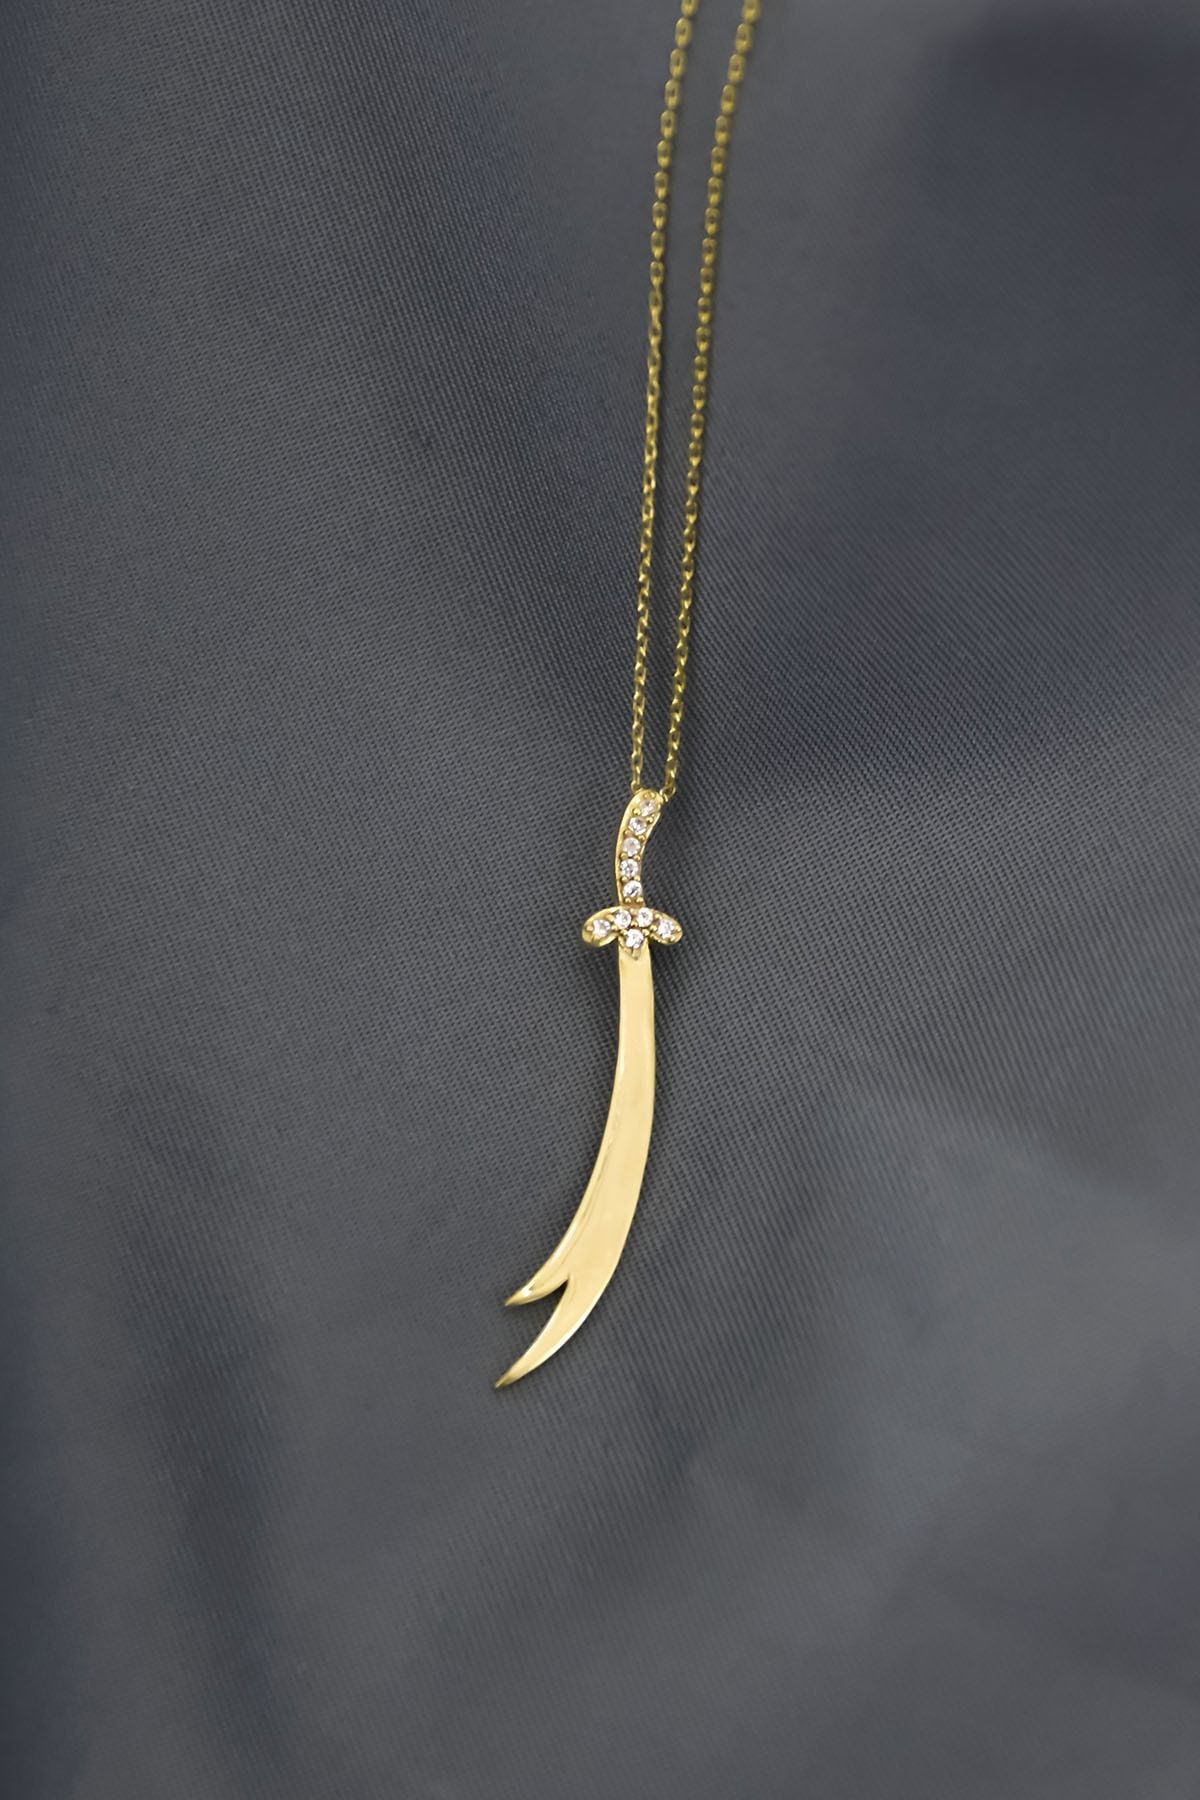 Papatya Silver 925 Ayar Gümüş Gold Kaplama Dikey Taşlı Zülfikar Kılıç Kolye